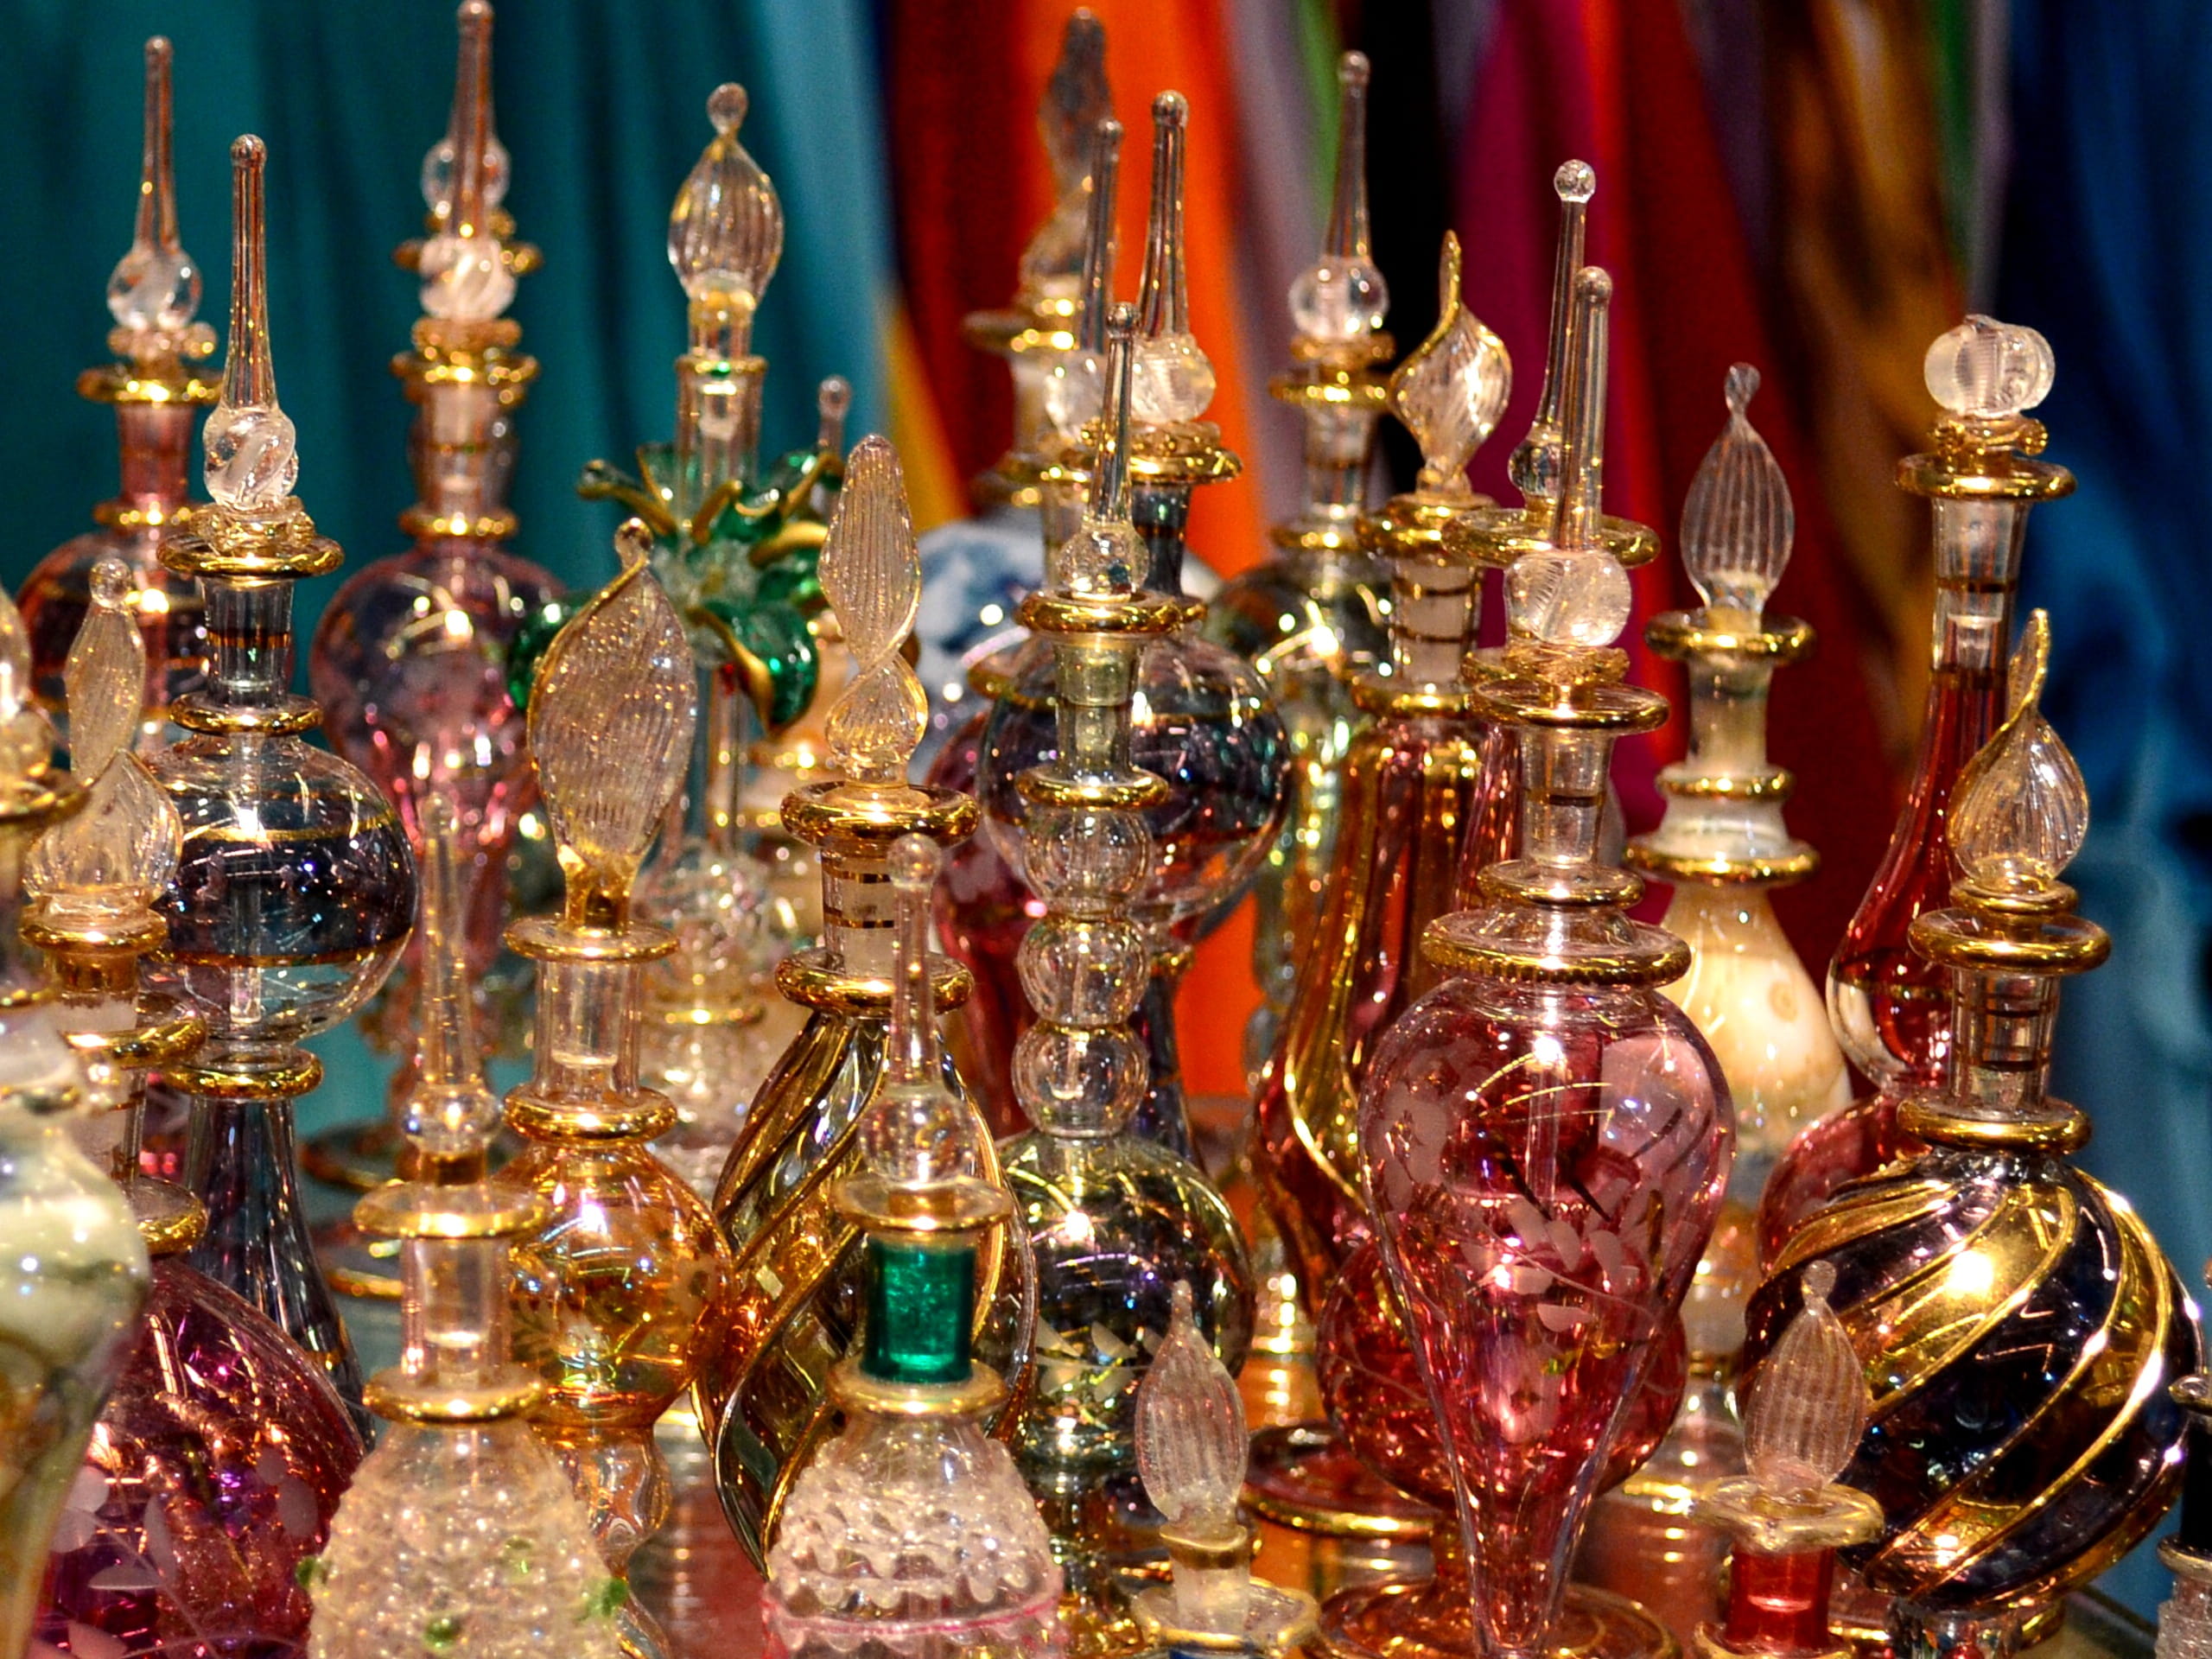 arab perfumes, essences, bazar, eastern glass, east pavilion